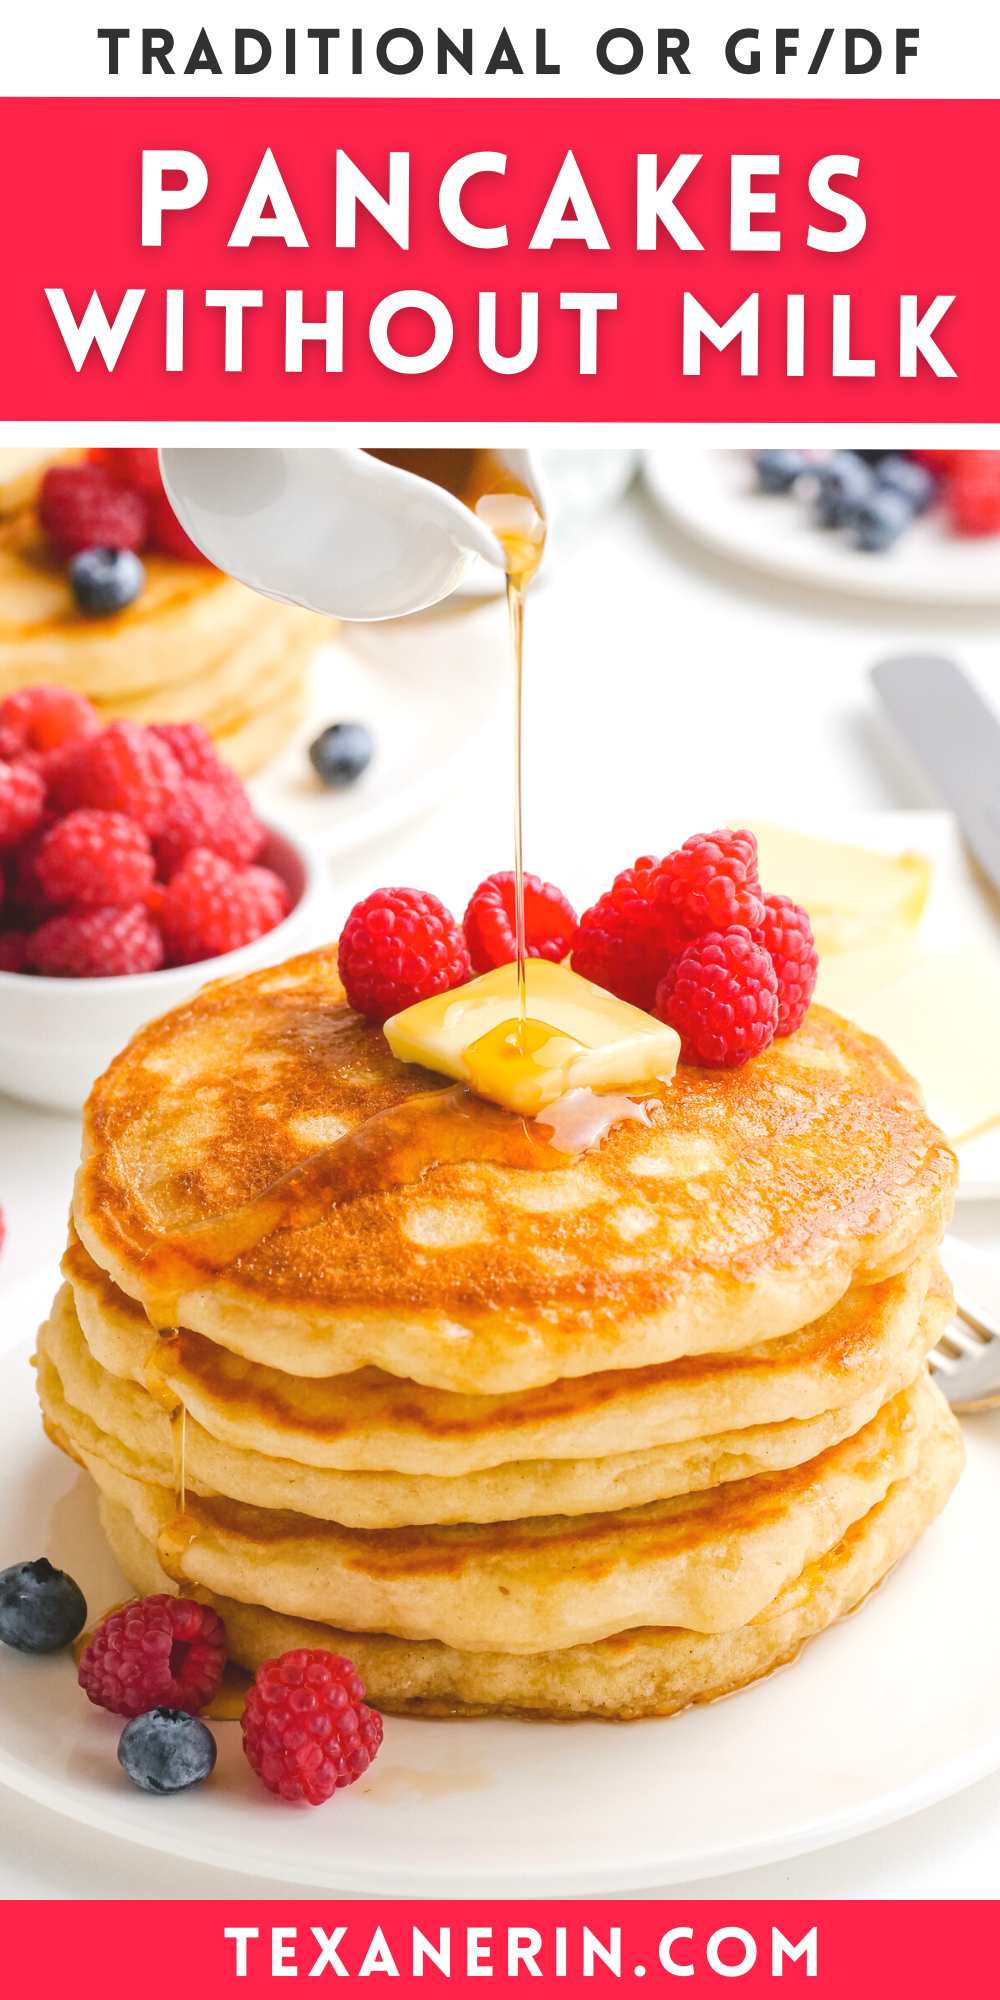 https://www.texanerin.com/content/uploads/2021/02/pancakes-without-milk-pin-image-2.jpg